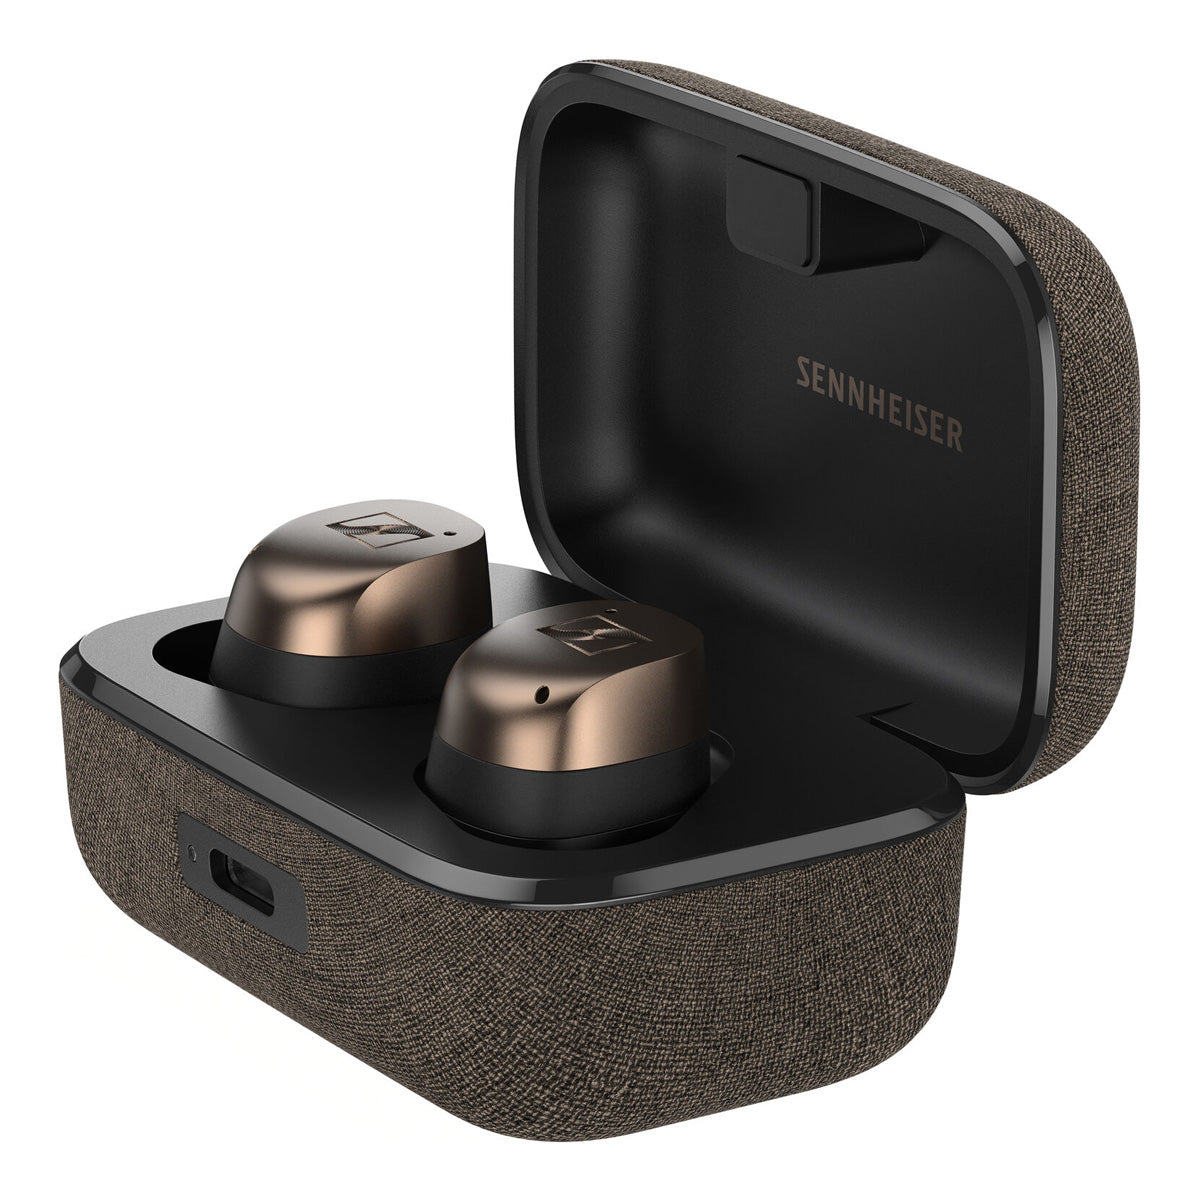 Sennheiser MOMENTUM True Wireless 4 Noise-Canceling Earbuds - Black Copper